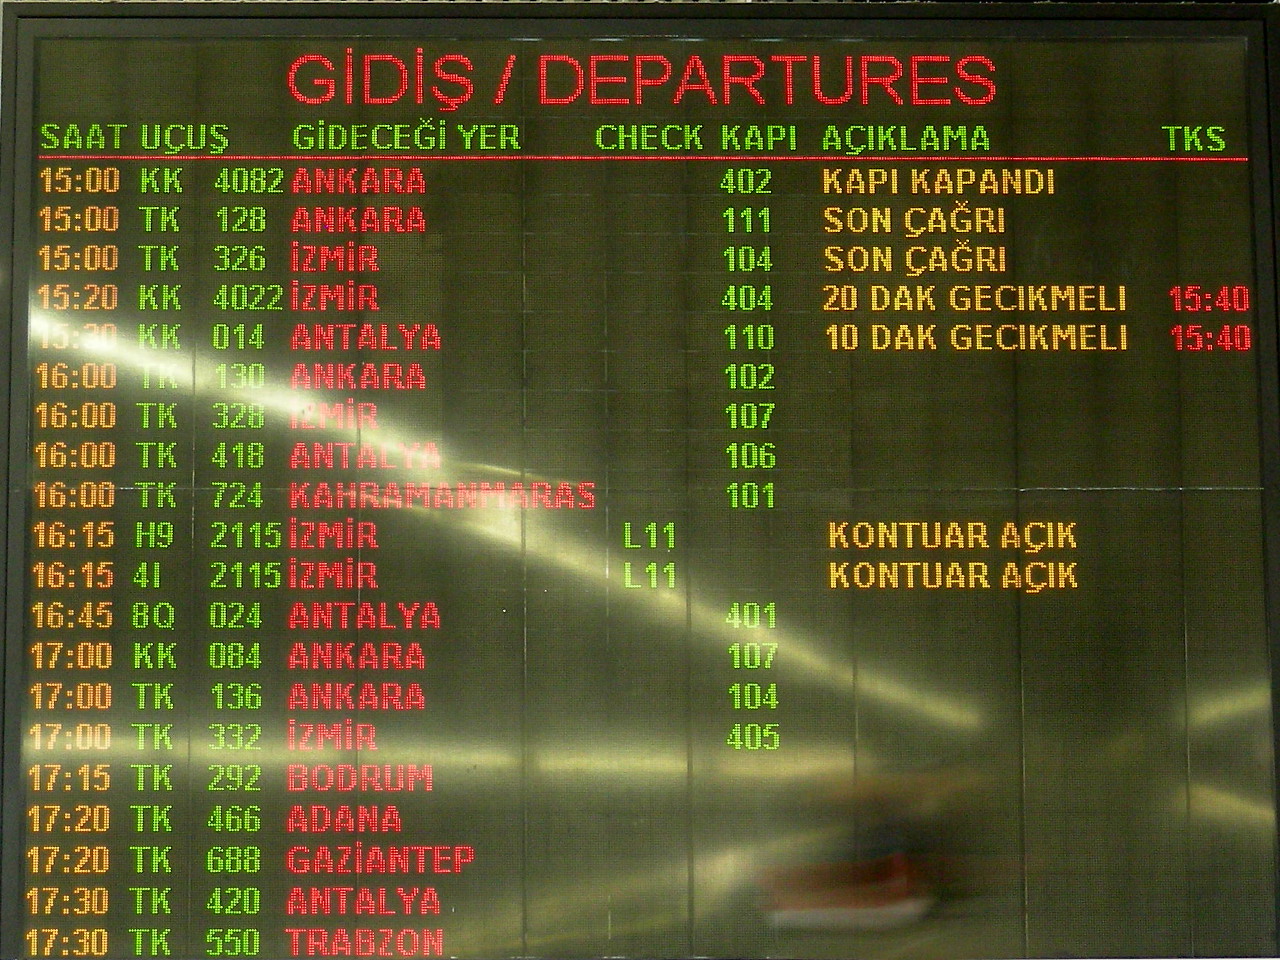 Warten am Atatürk-Airport in Istanbul